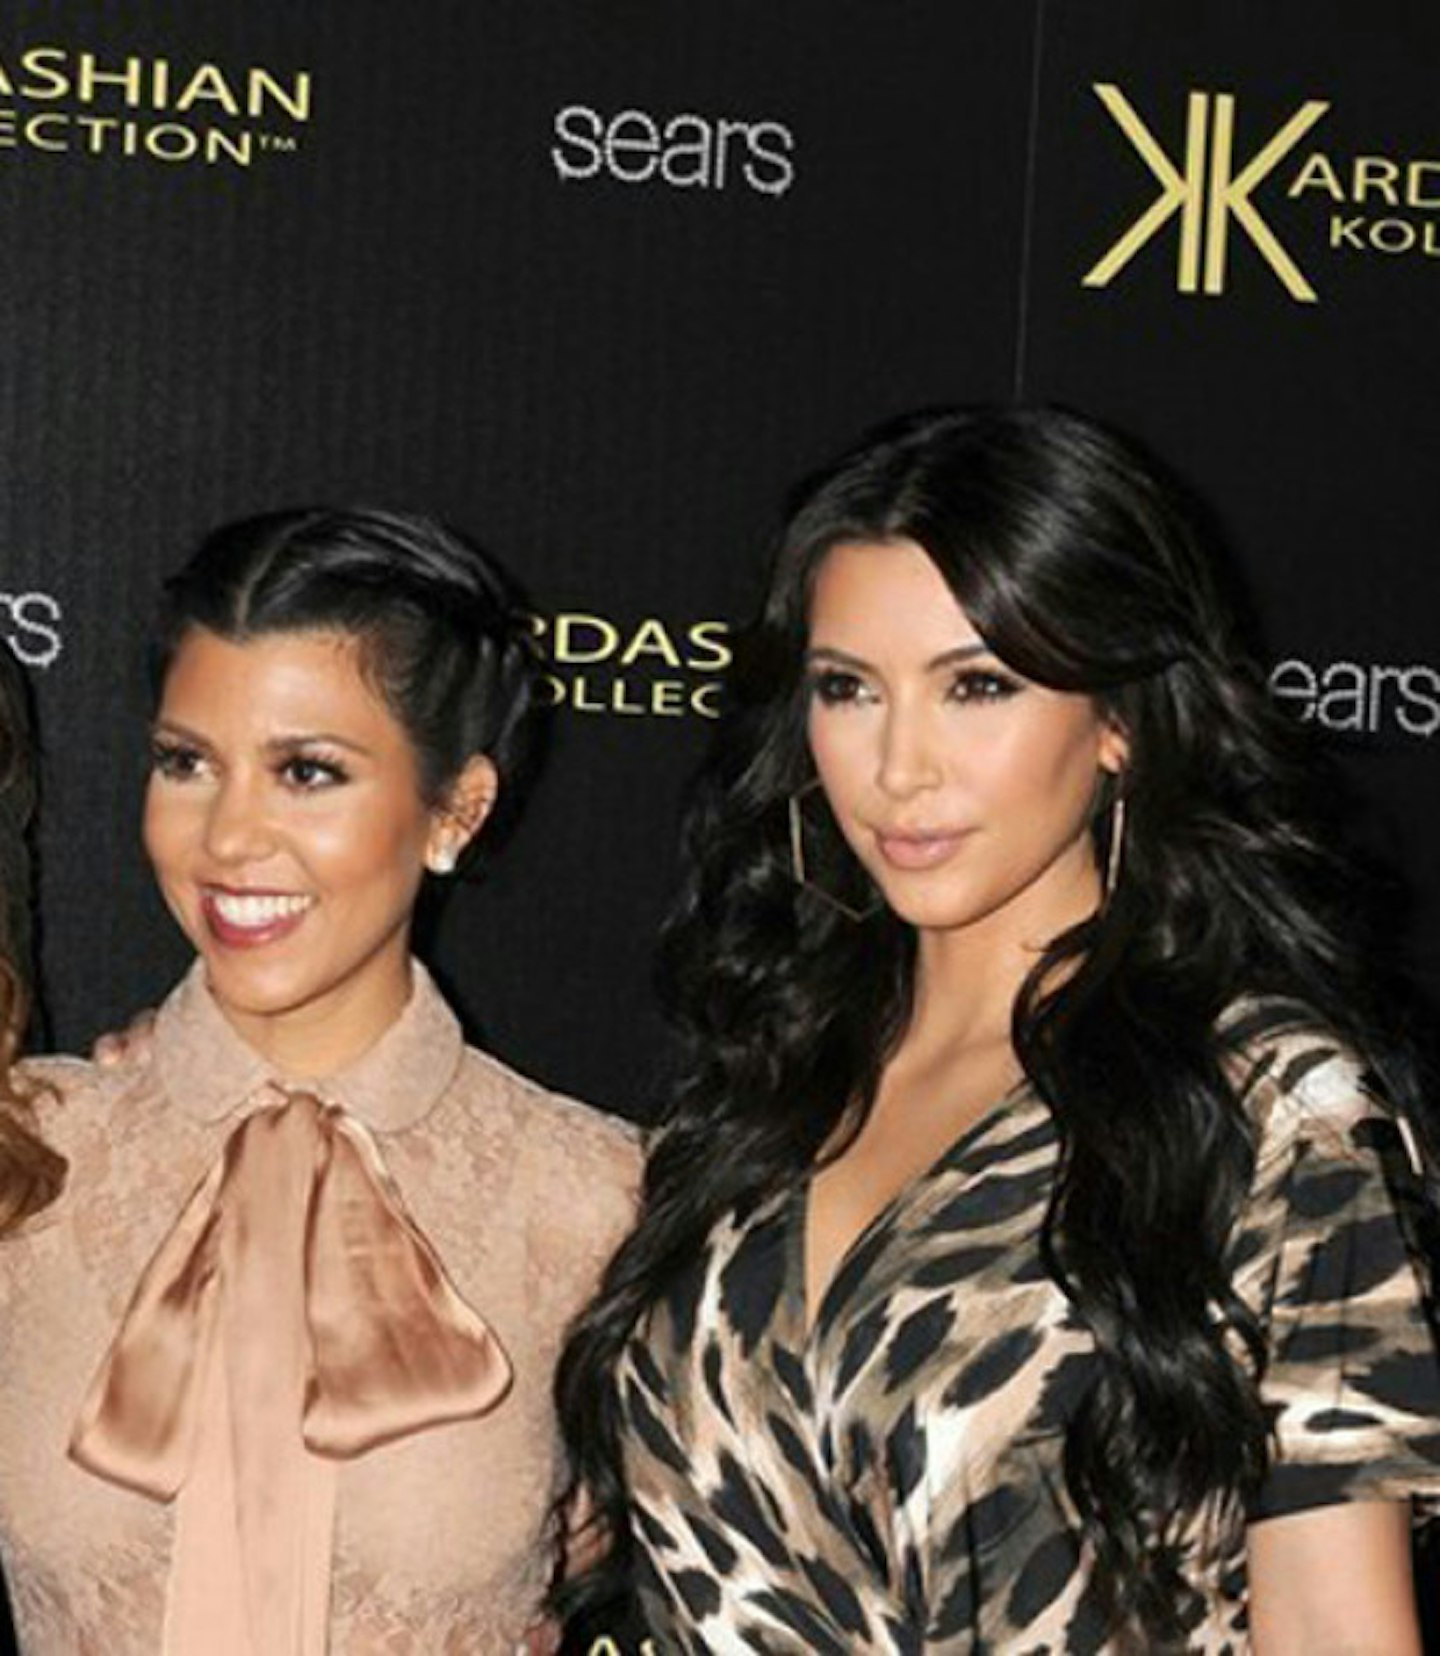 kardashian-collection-sears-red-carpet